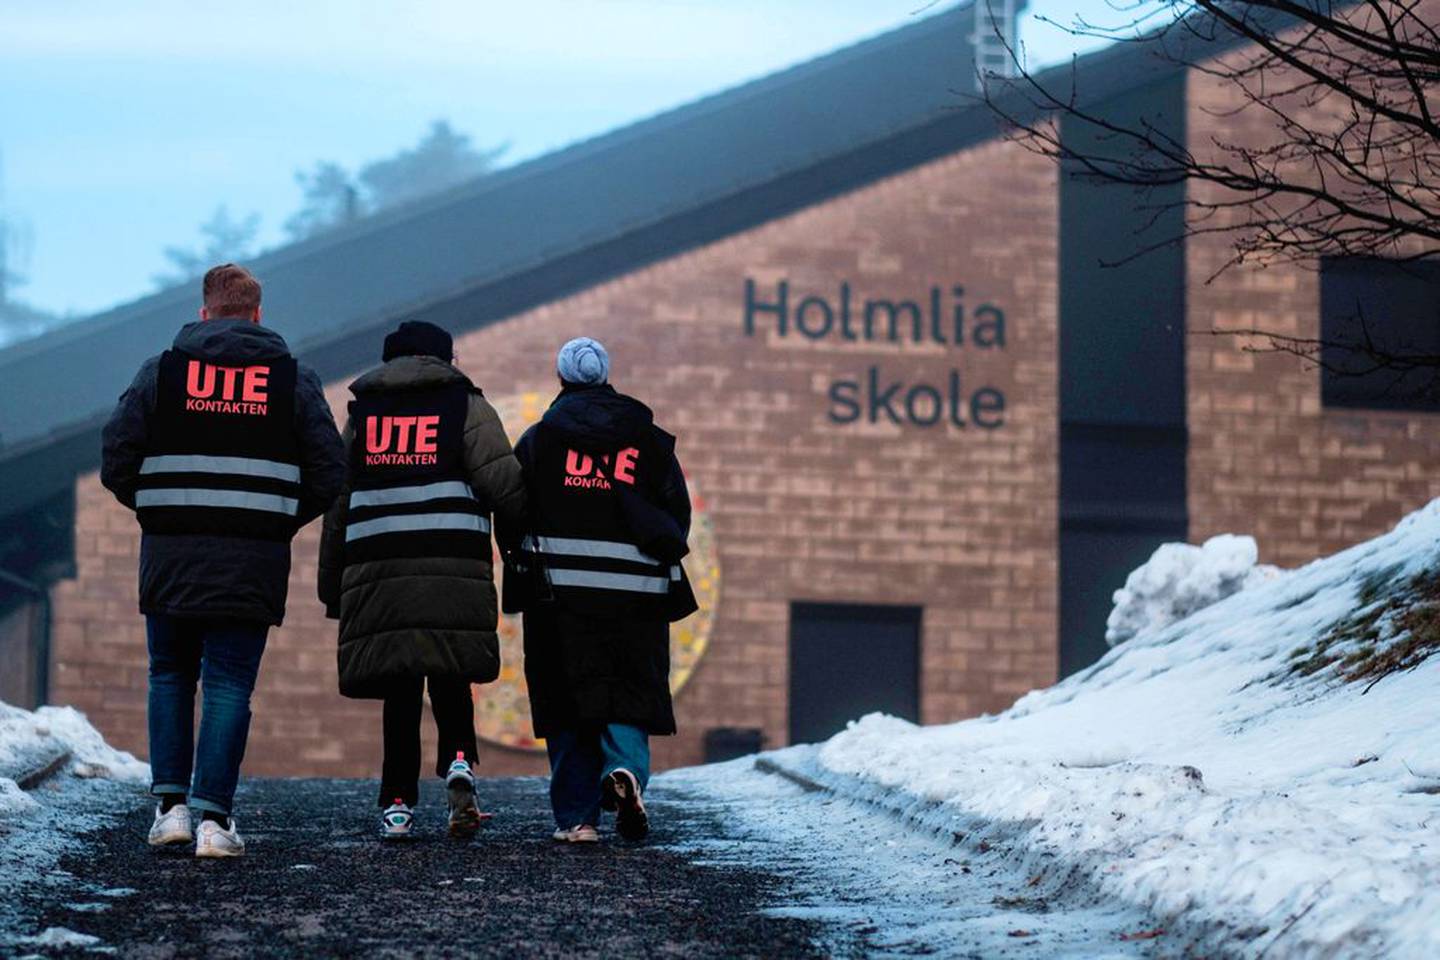 Utekontakten på Holmlia.

Foto: Hanna Skotheim/FriFagbevegelse